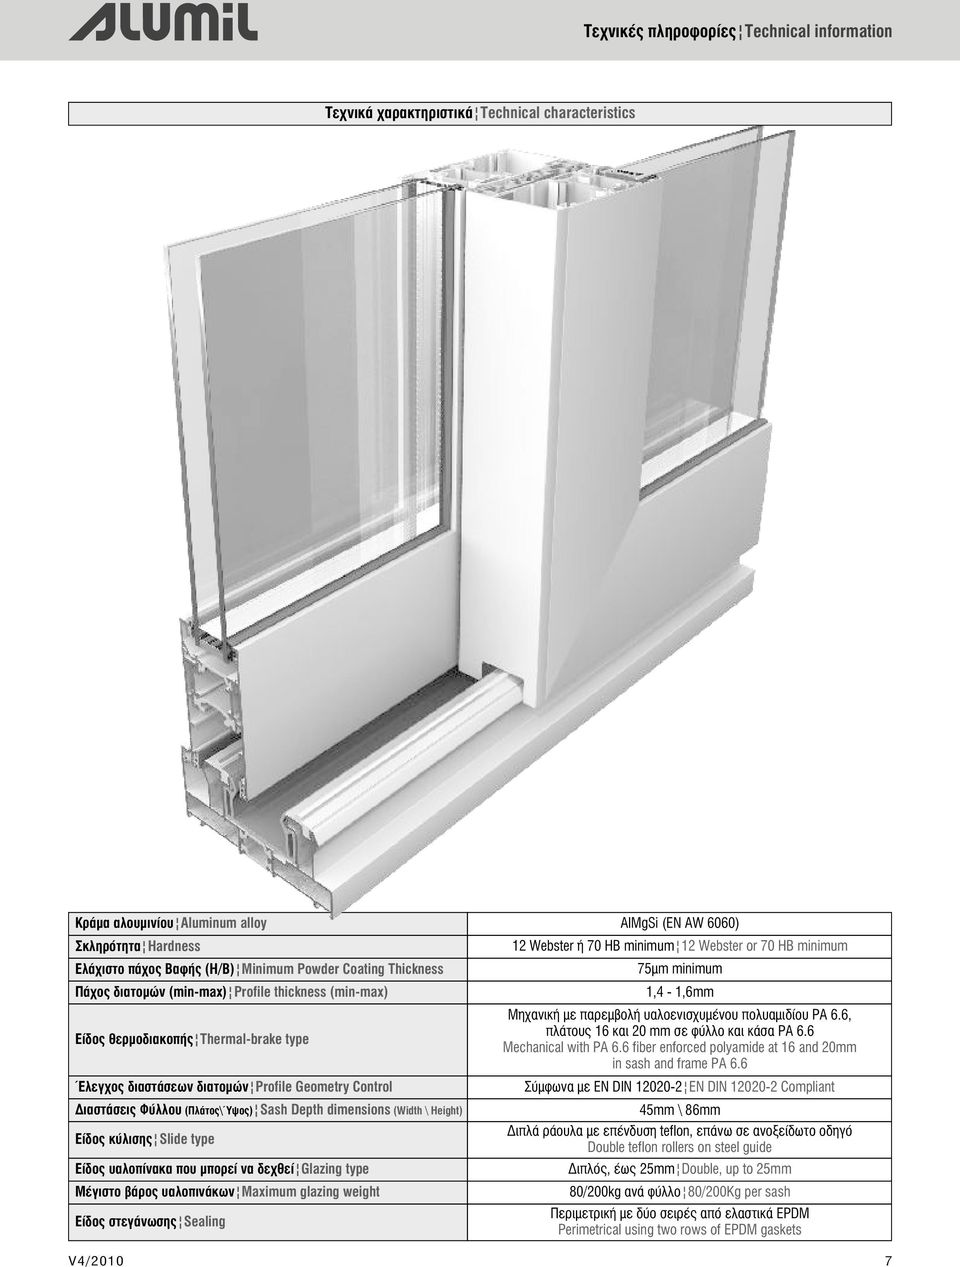 dimensions (Width \ Height) Είδος κύλισης Slide type Είδος υαλοπίνακα που μπορεί να δεχθεί Glazing type Μέγιστο βάρος υαλοπινάκων Maximum glazing weight Είδος στεγάνωσης Sealing AlMgSi (EN AW 6060)